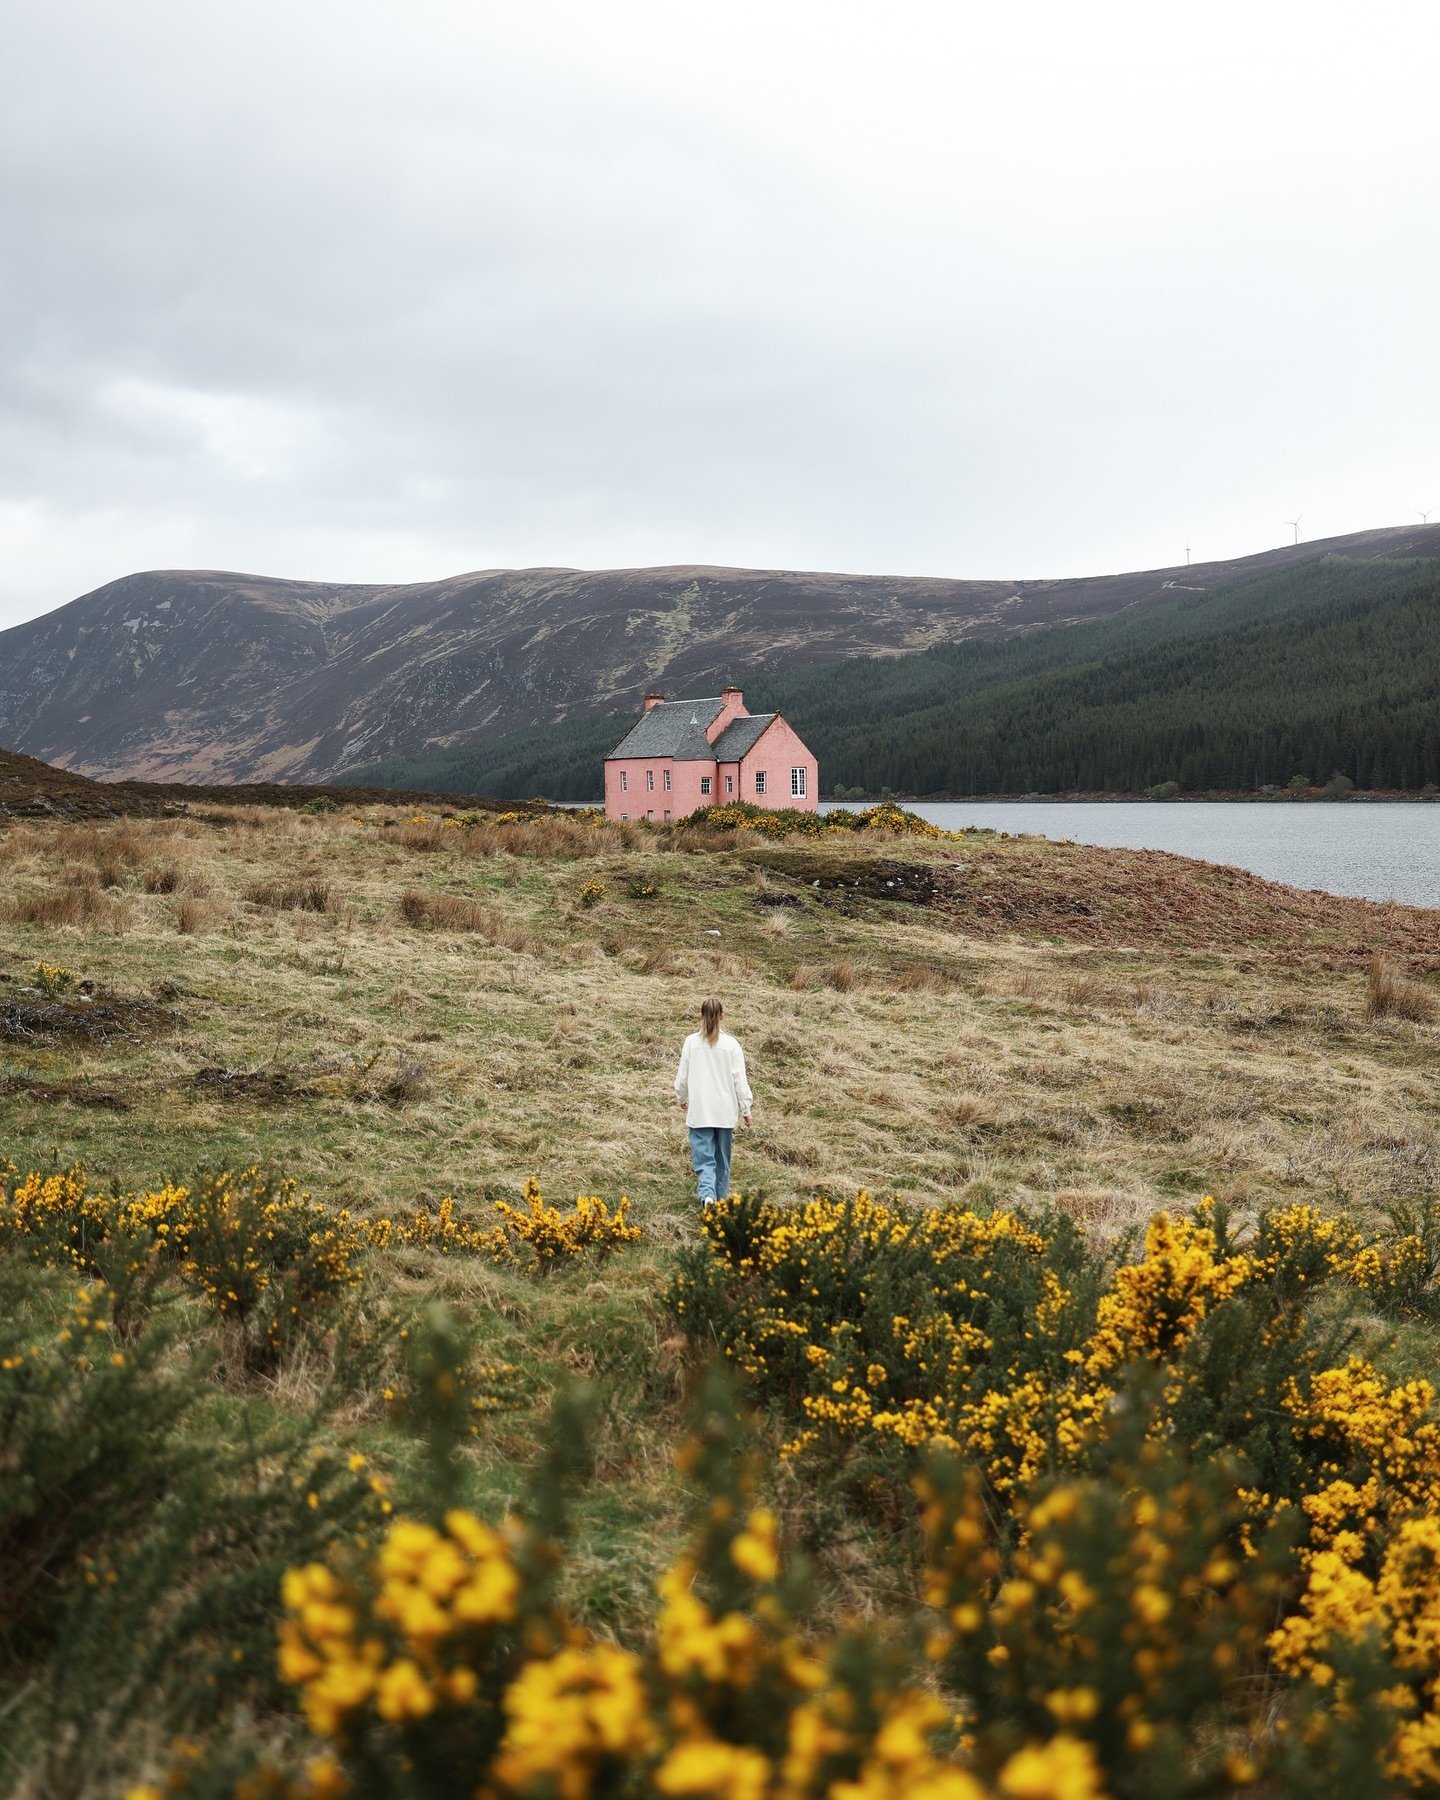 Dreaming of a walk through Scotland&rsquo;s insane landscapes ⛰🌼 
.
.
.
.
.
#scotland #scotland_greatshots #scotland_insta #scotlandexplore #scotlandtravel #scotlandshots #scotlandlover #scotlandtrip #scotlandroadtrip #loch #scotlandloch #lochglass 